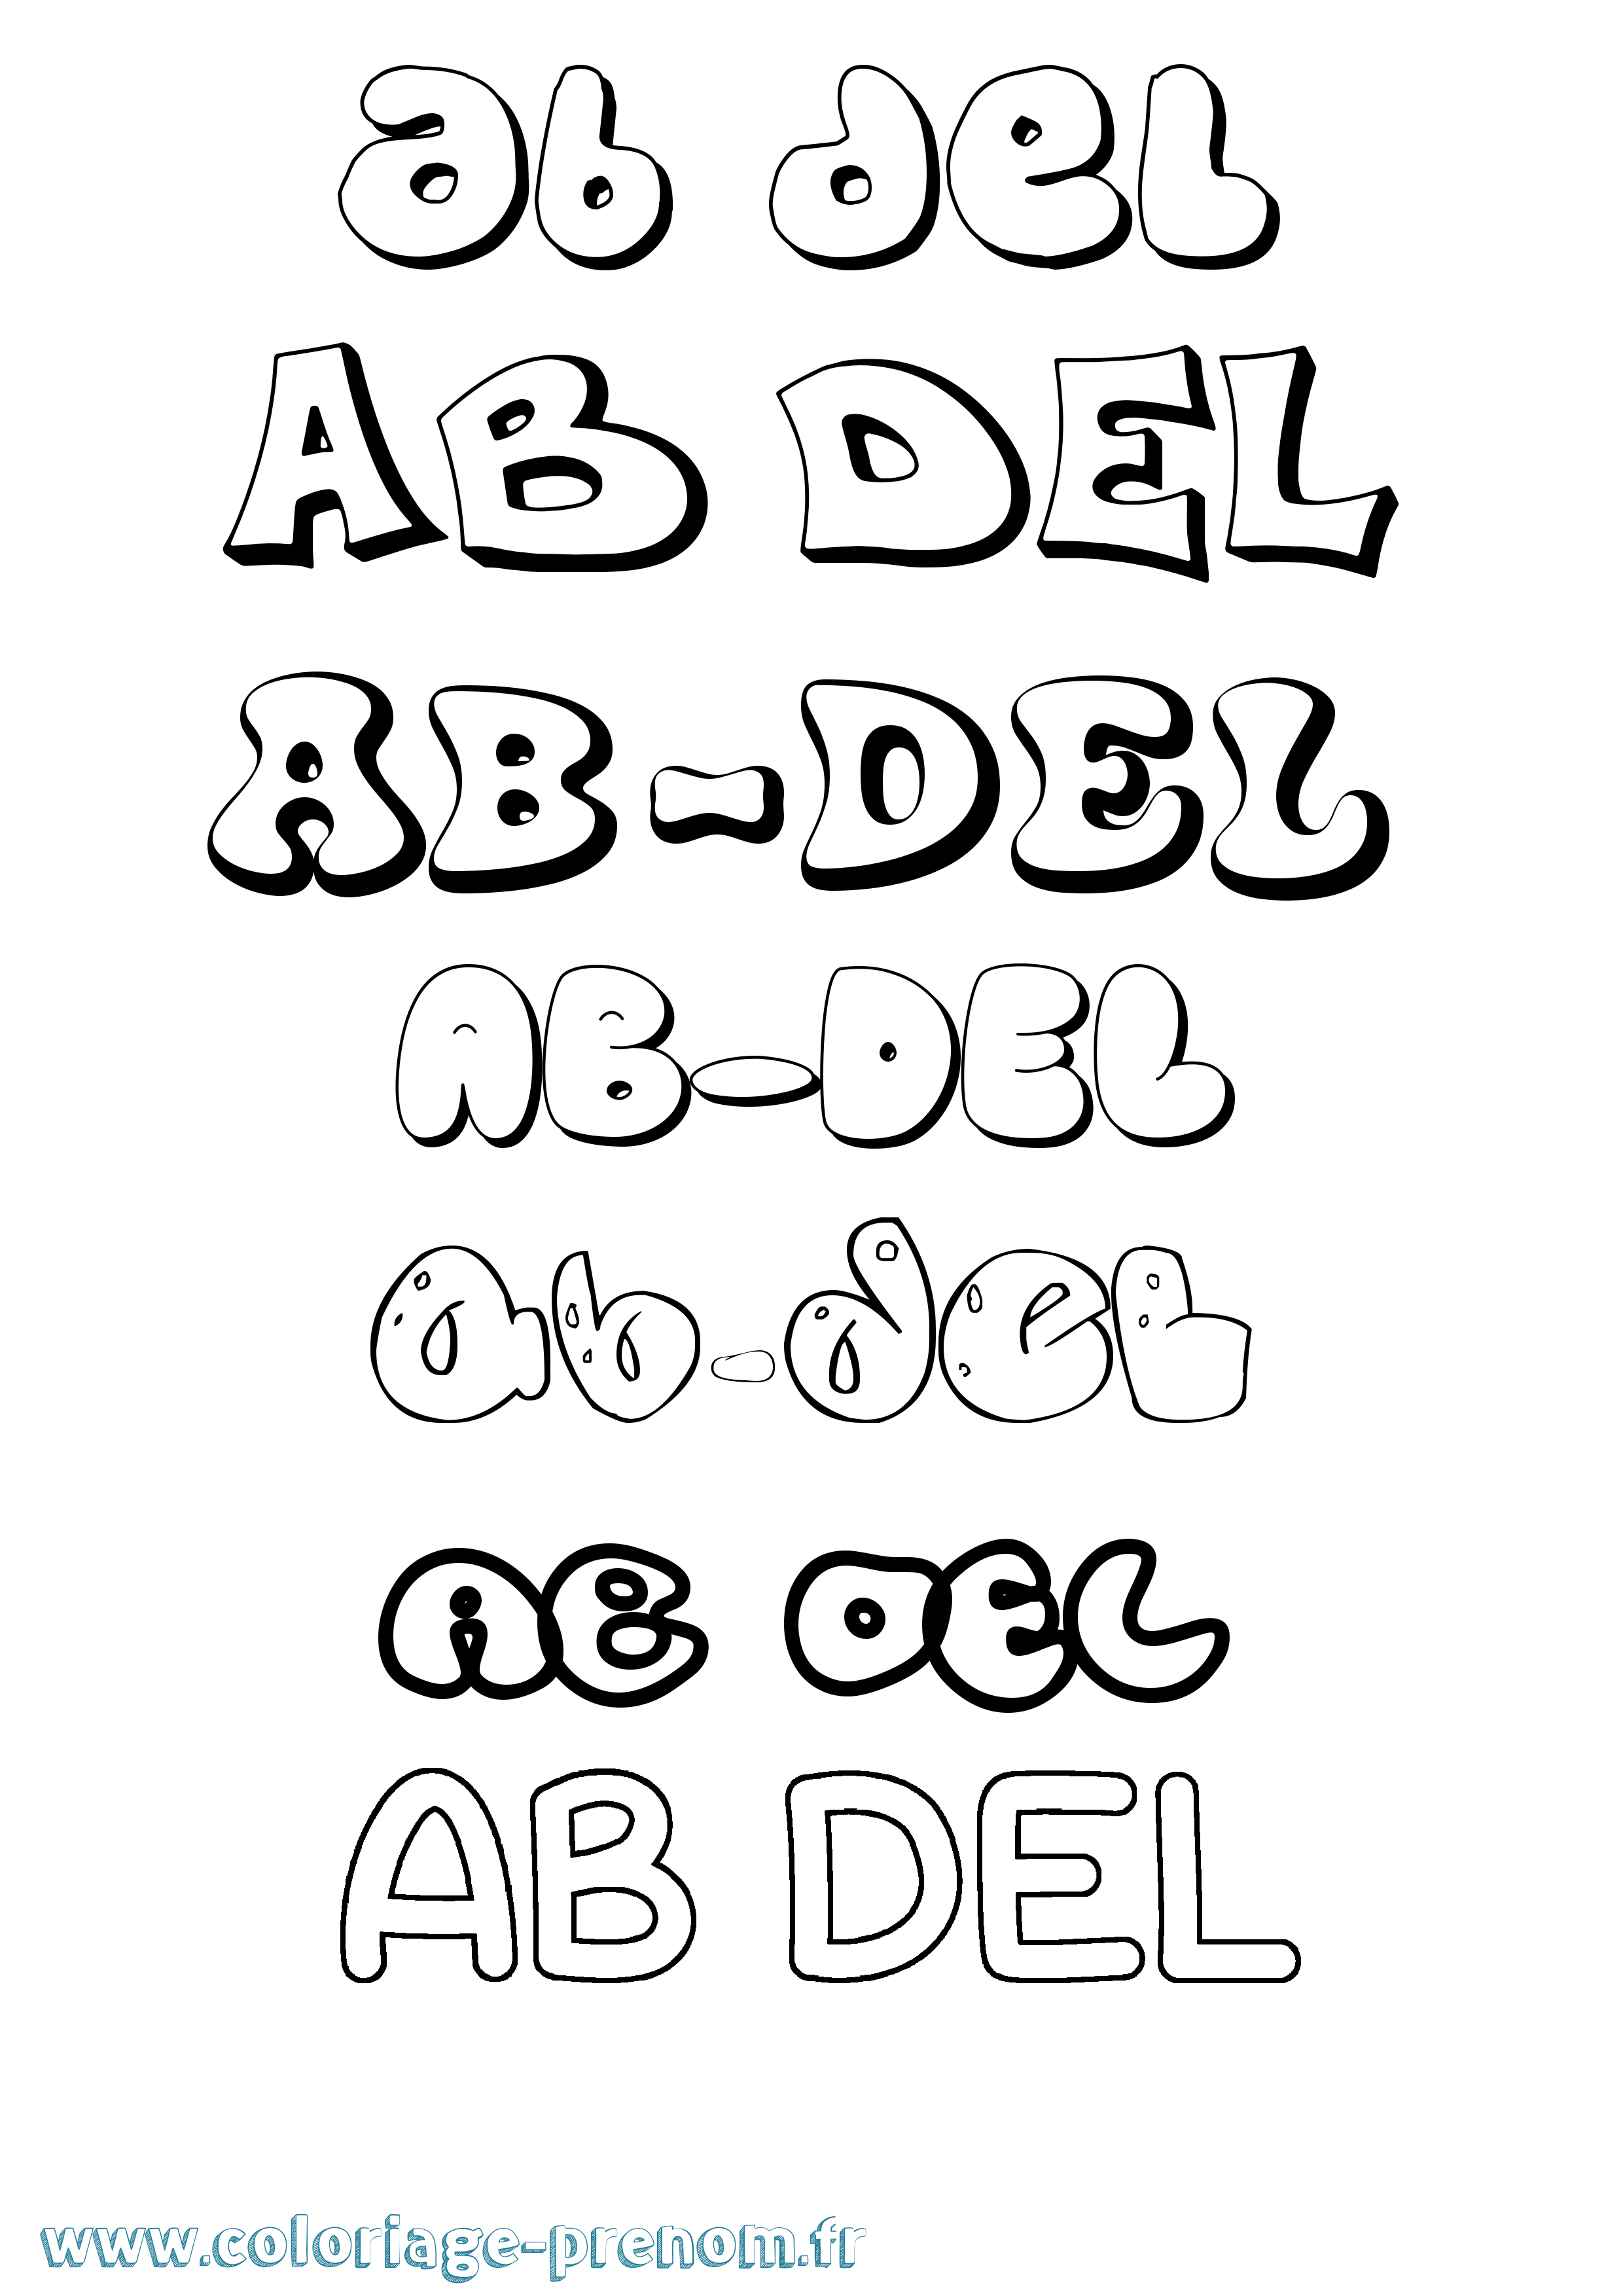 Coloriage prénom Ab-Del Bubble